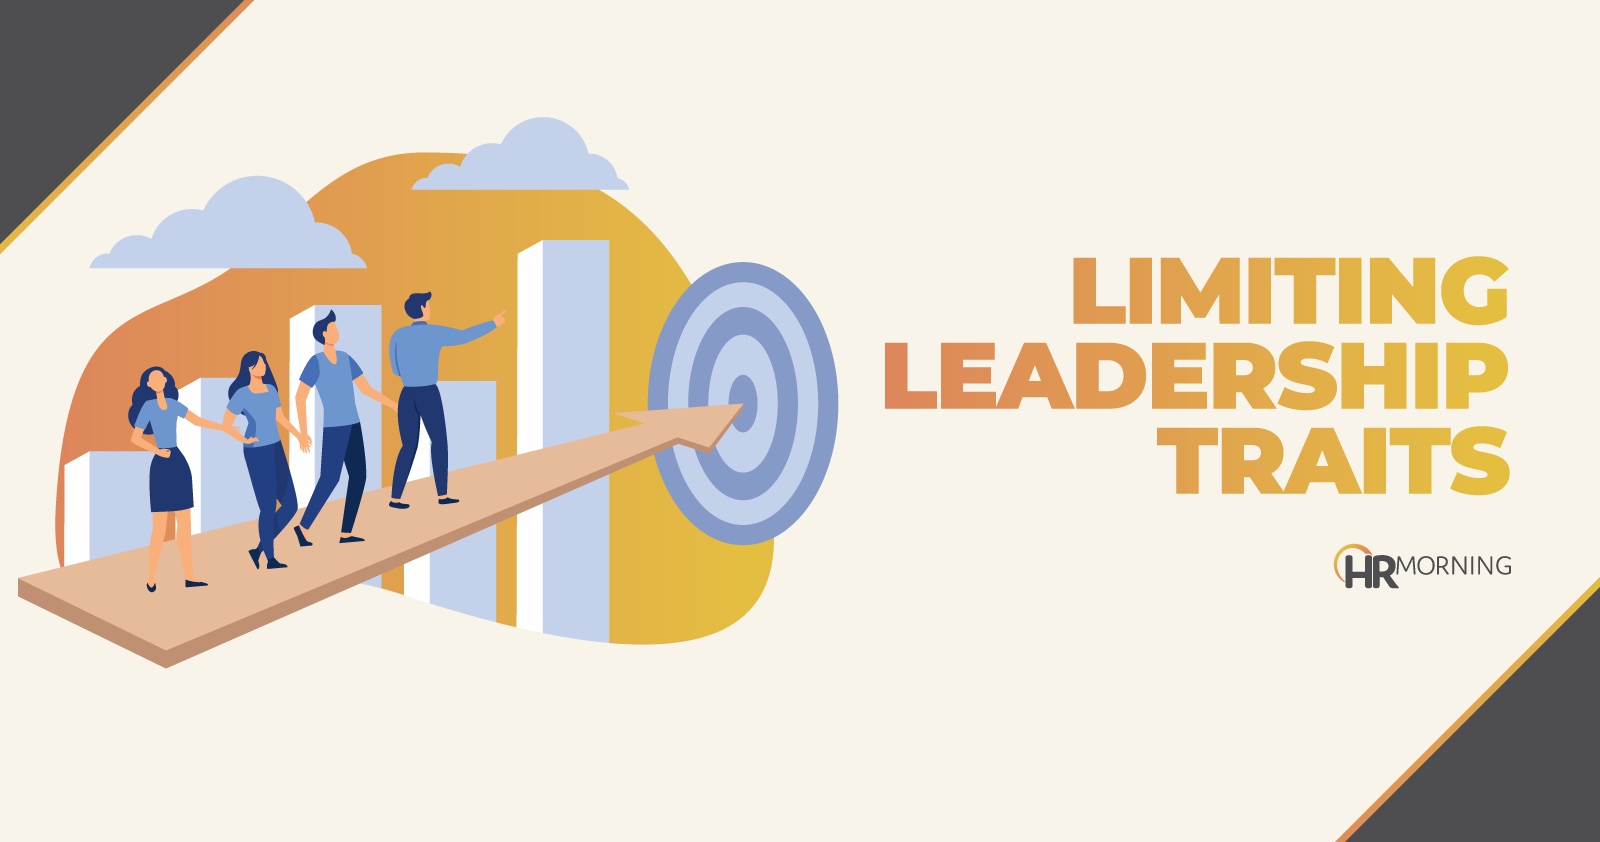 Limiting leadership traits